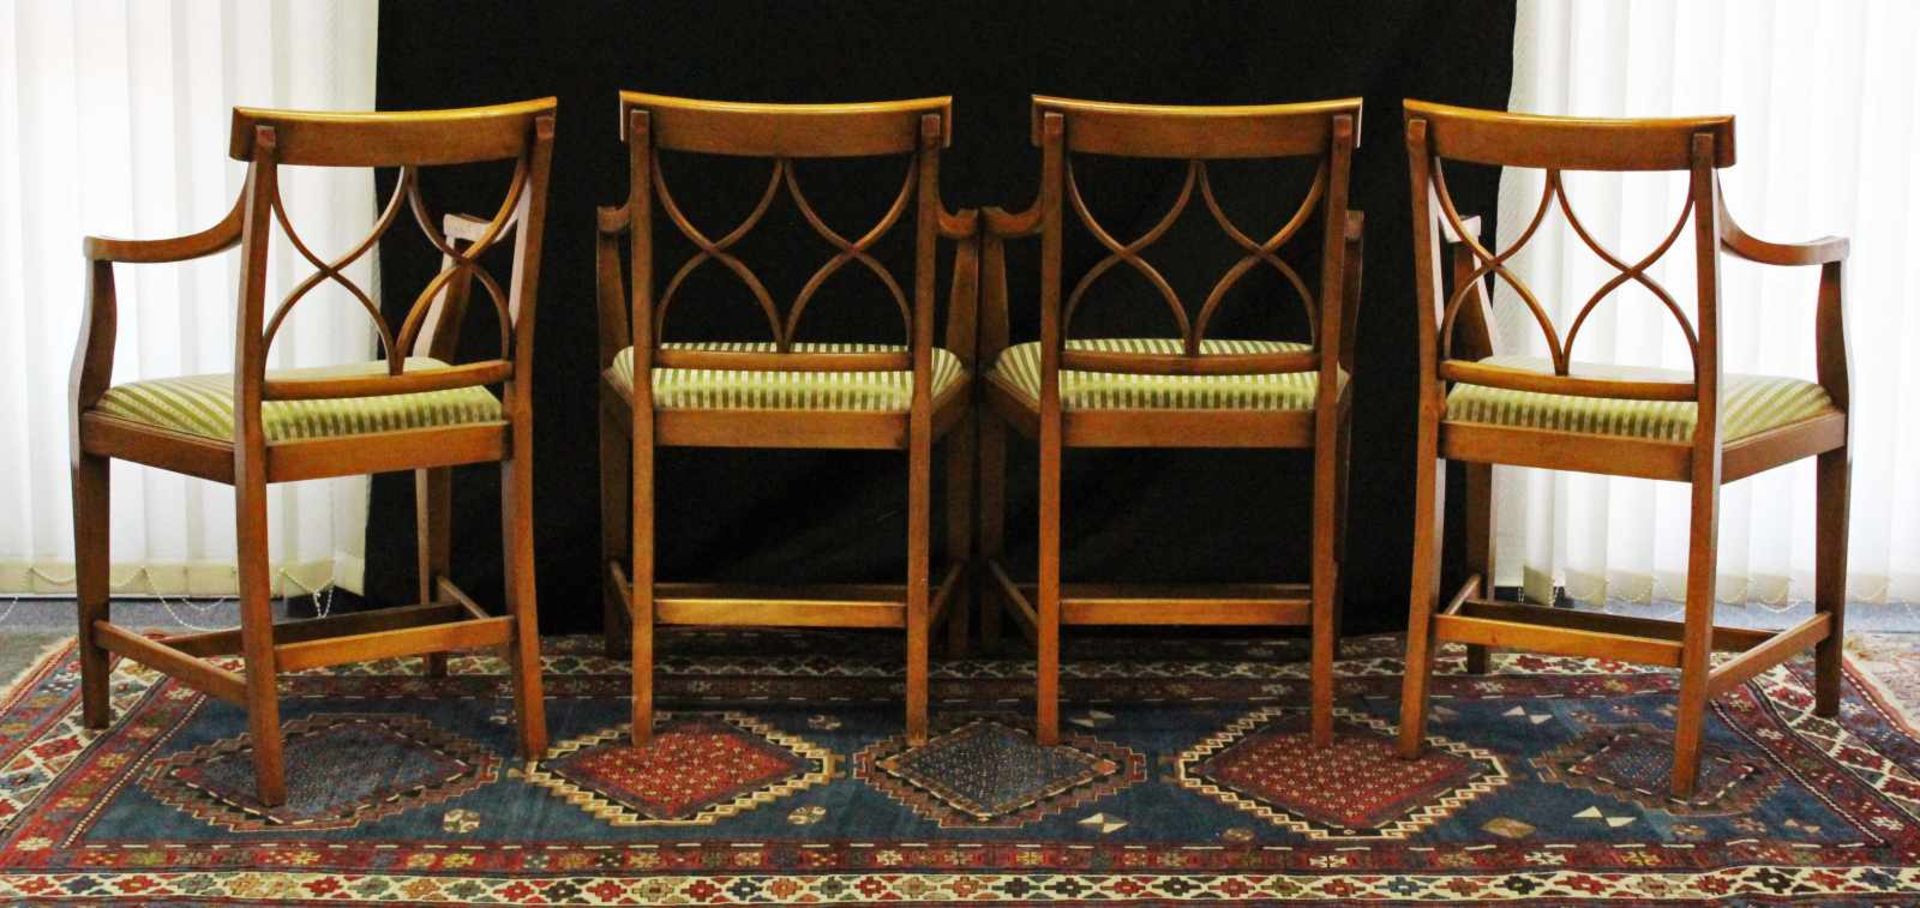 4 Stühle, gestempelt. "Reprodux. Made in England".88 cm x 56 cm x 46 cm. Sitzhöhe 50 cm.4 chairs, - Bild 5 aus 9